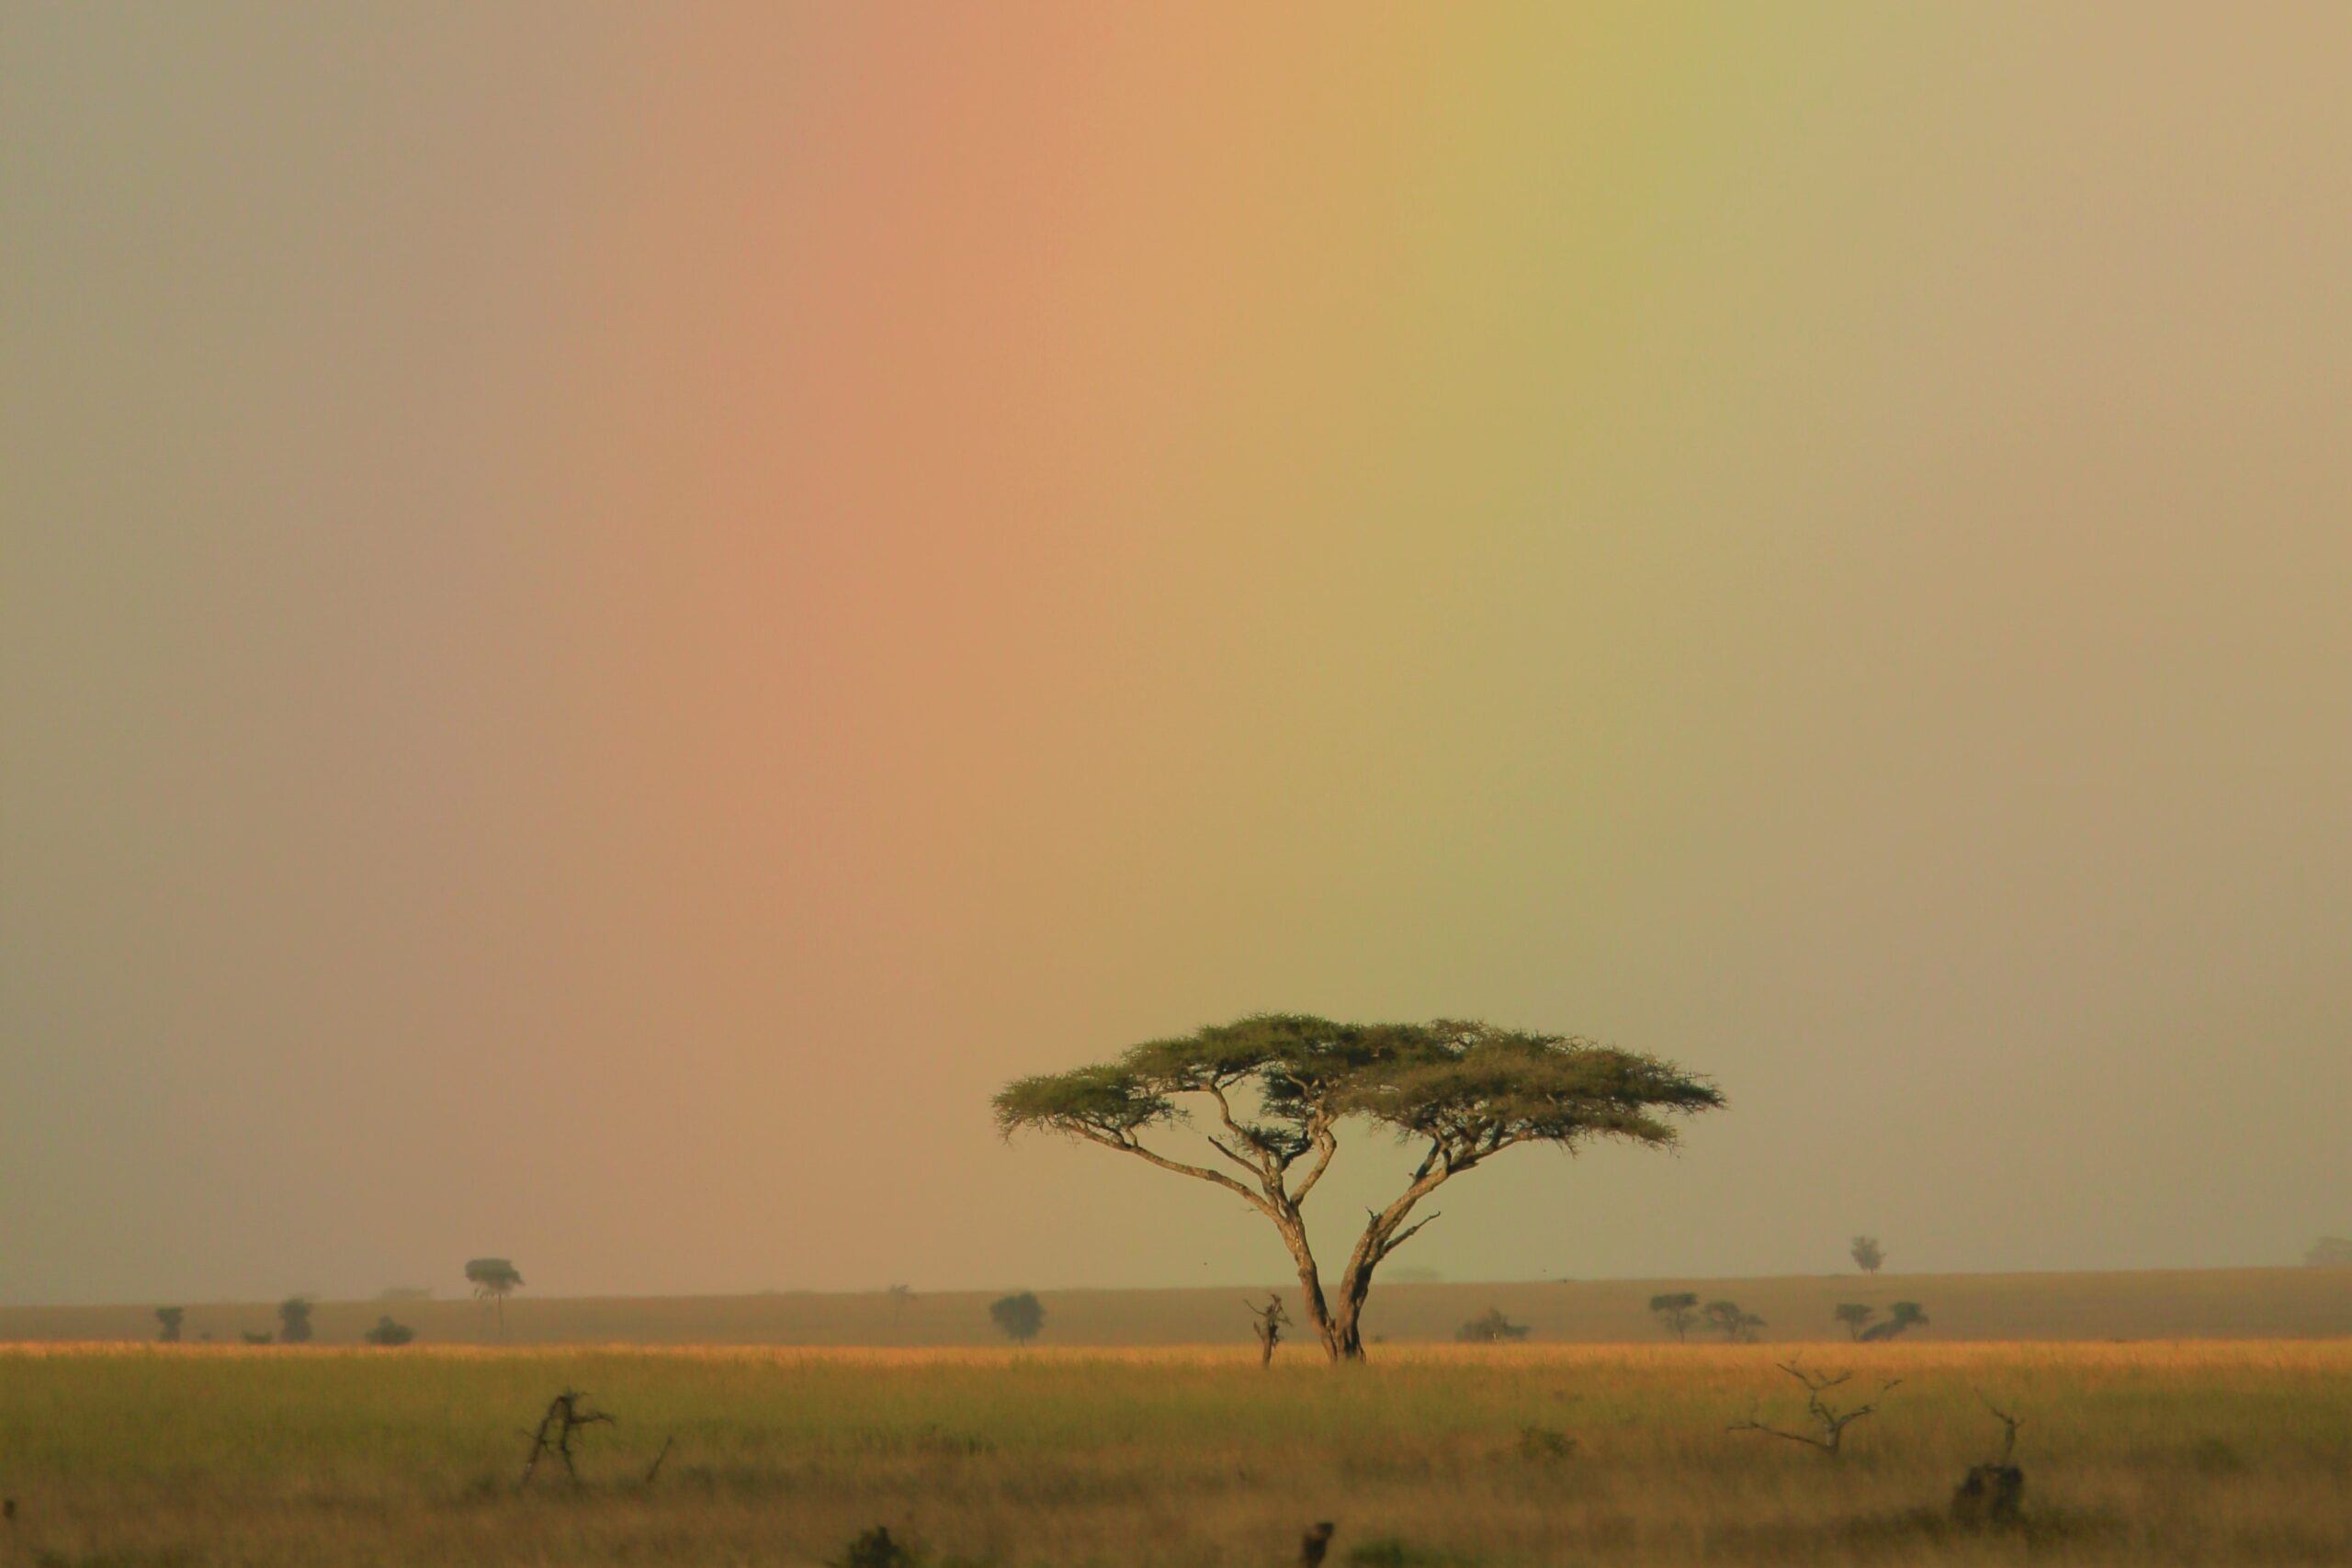 Serengeti - Tanzania - A. Dobson (1.1)